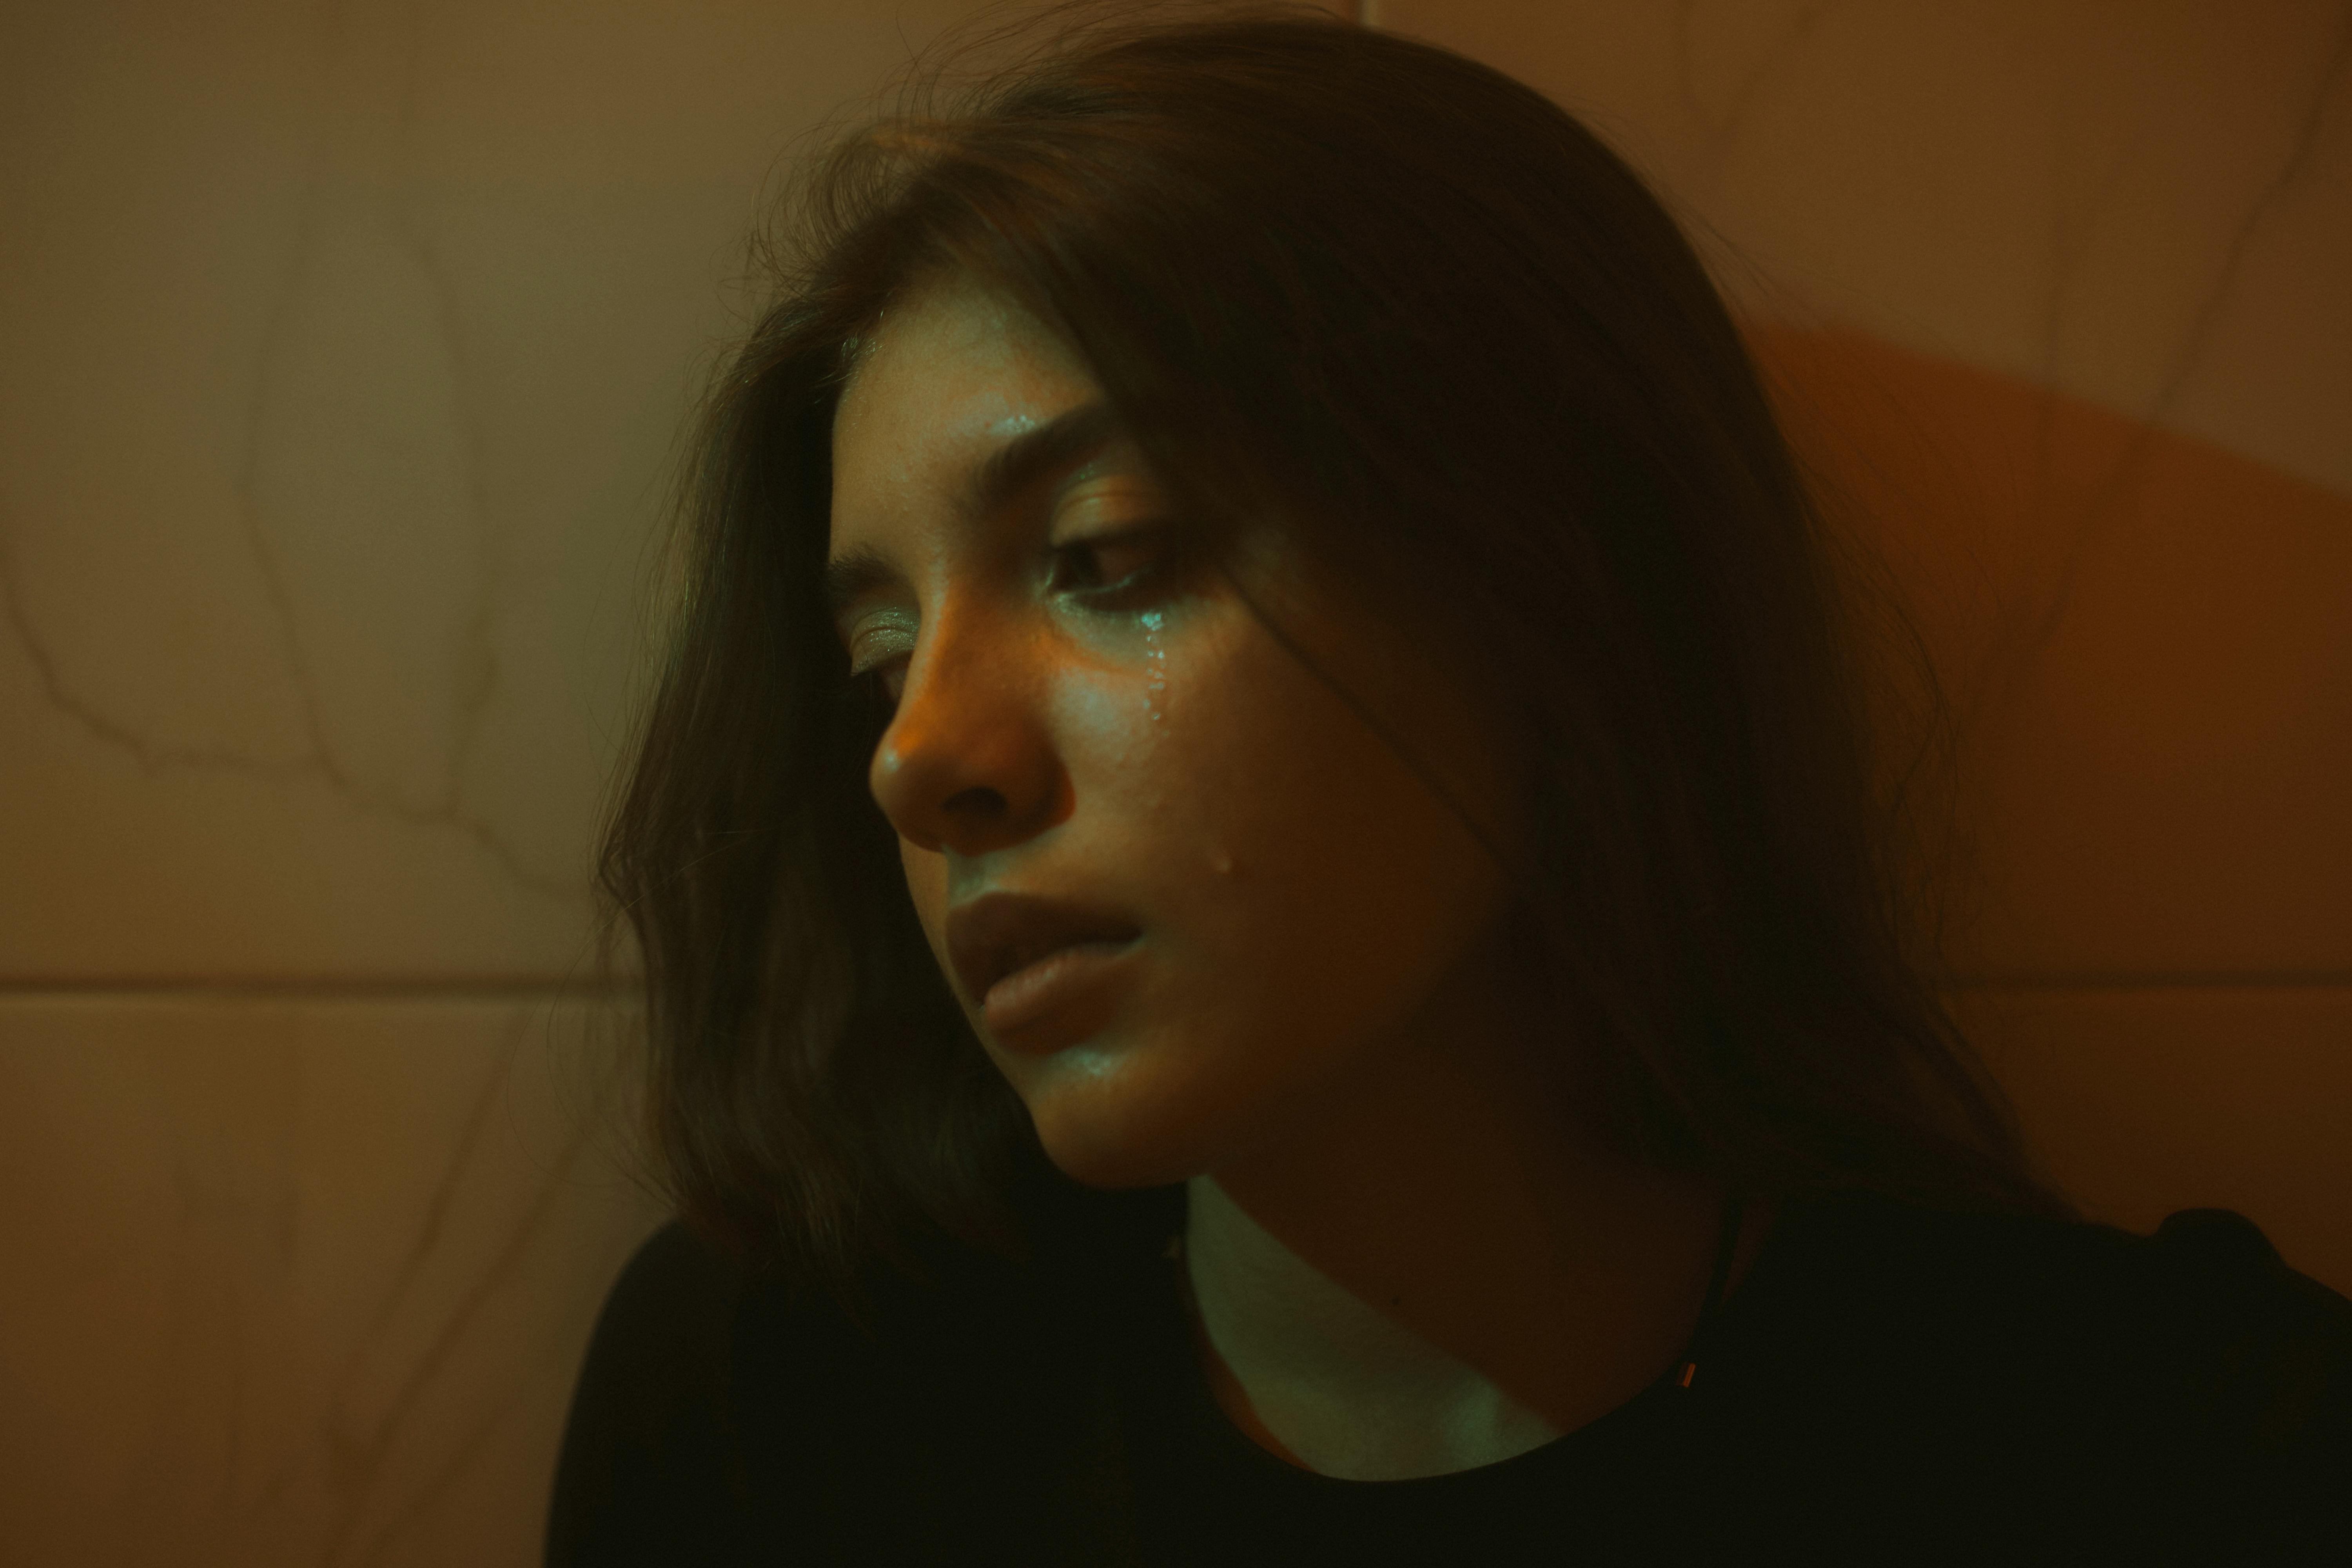 Una joven llorando | Fuente: Pexels